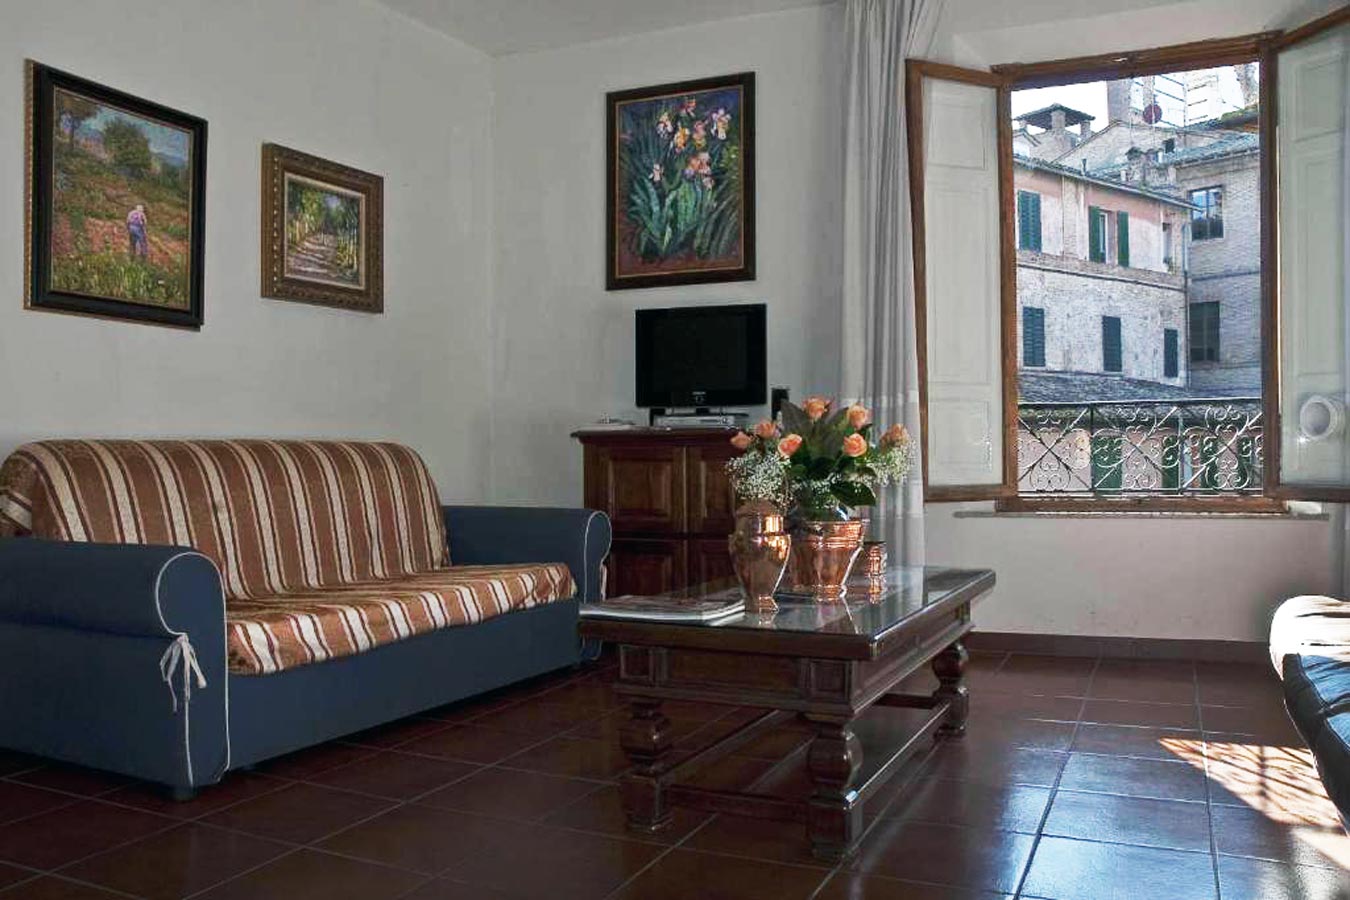 Camere Siena B&B appartamento centro storico